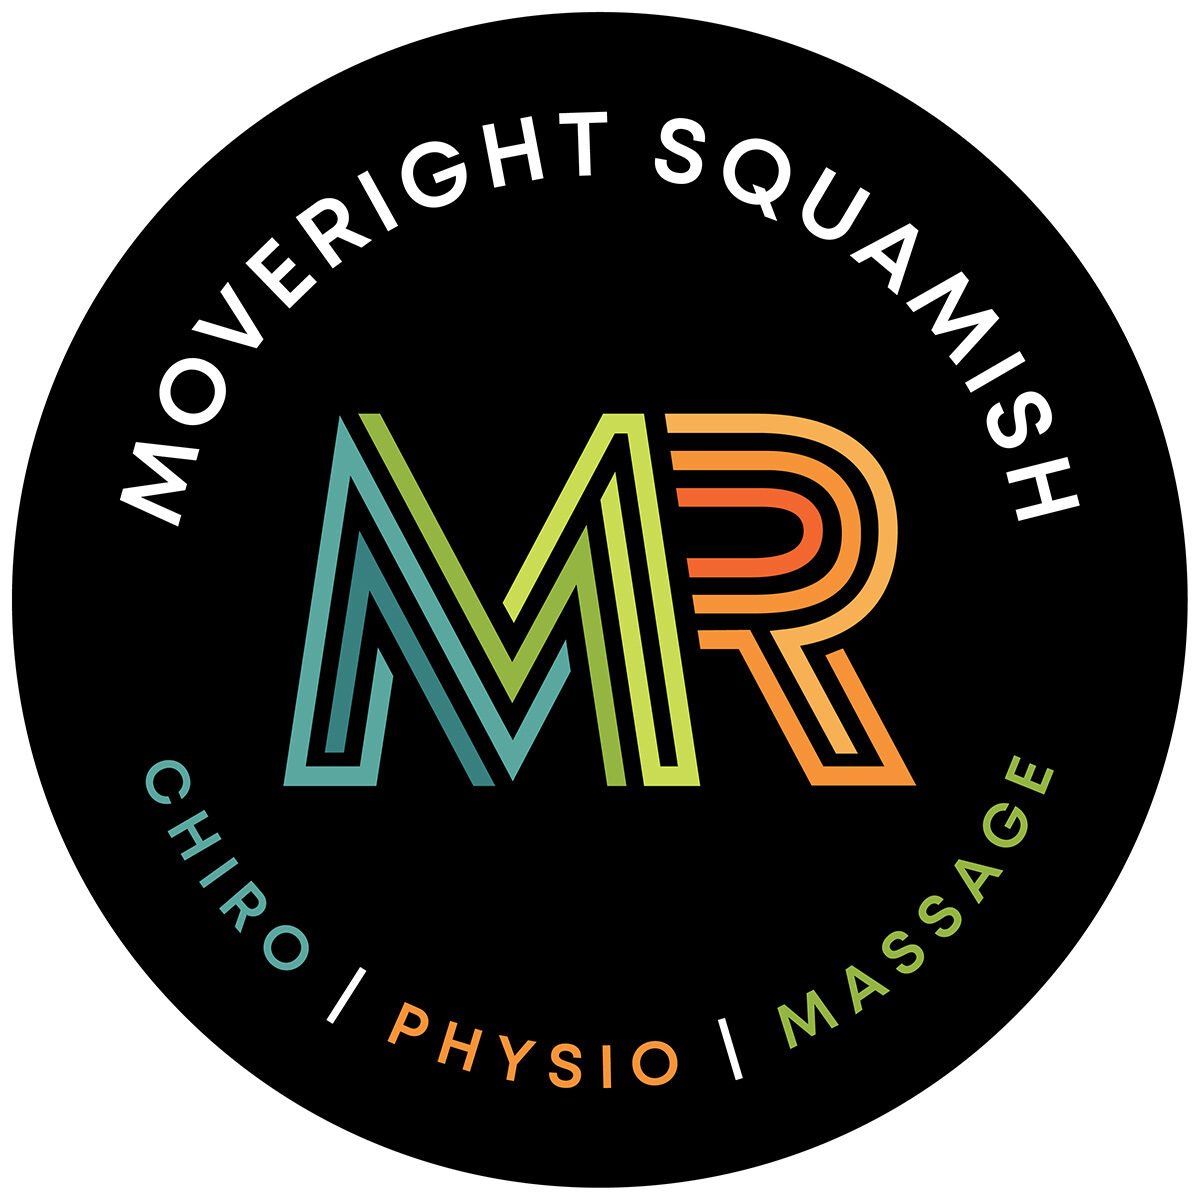 lindsay-mcghee-designs-MoveRight-Squamish-logo-badge